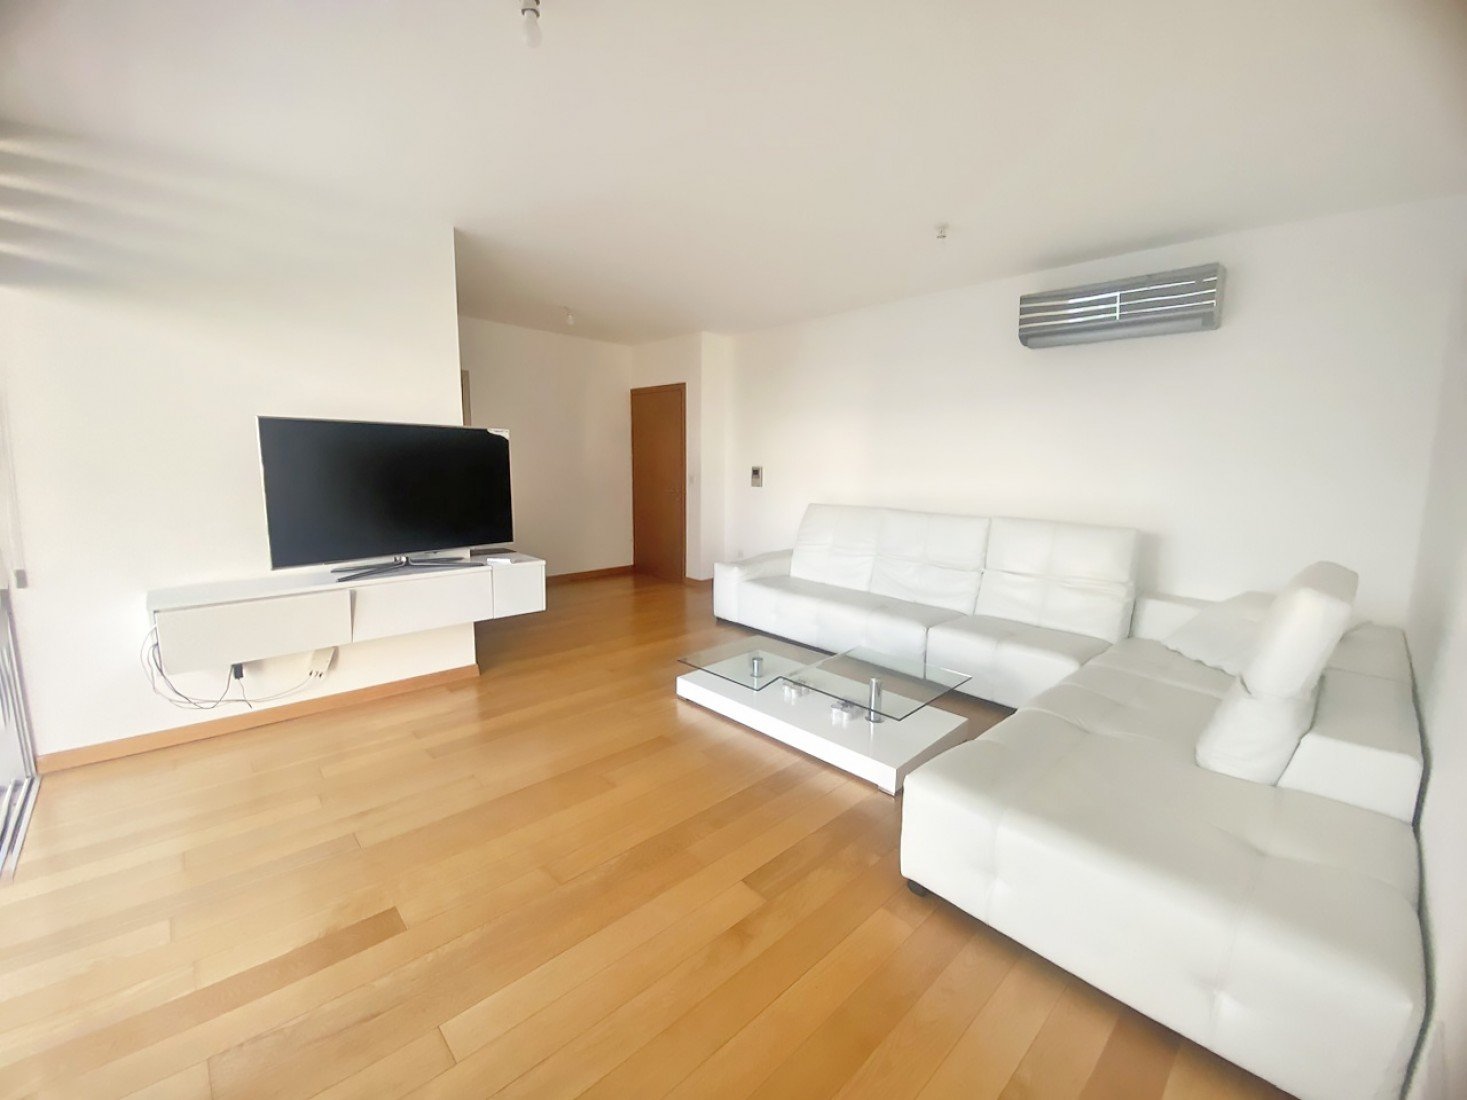 Apartment for sale in Nicosia, Cyprus 2920387678